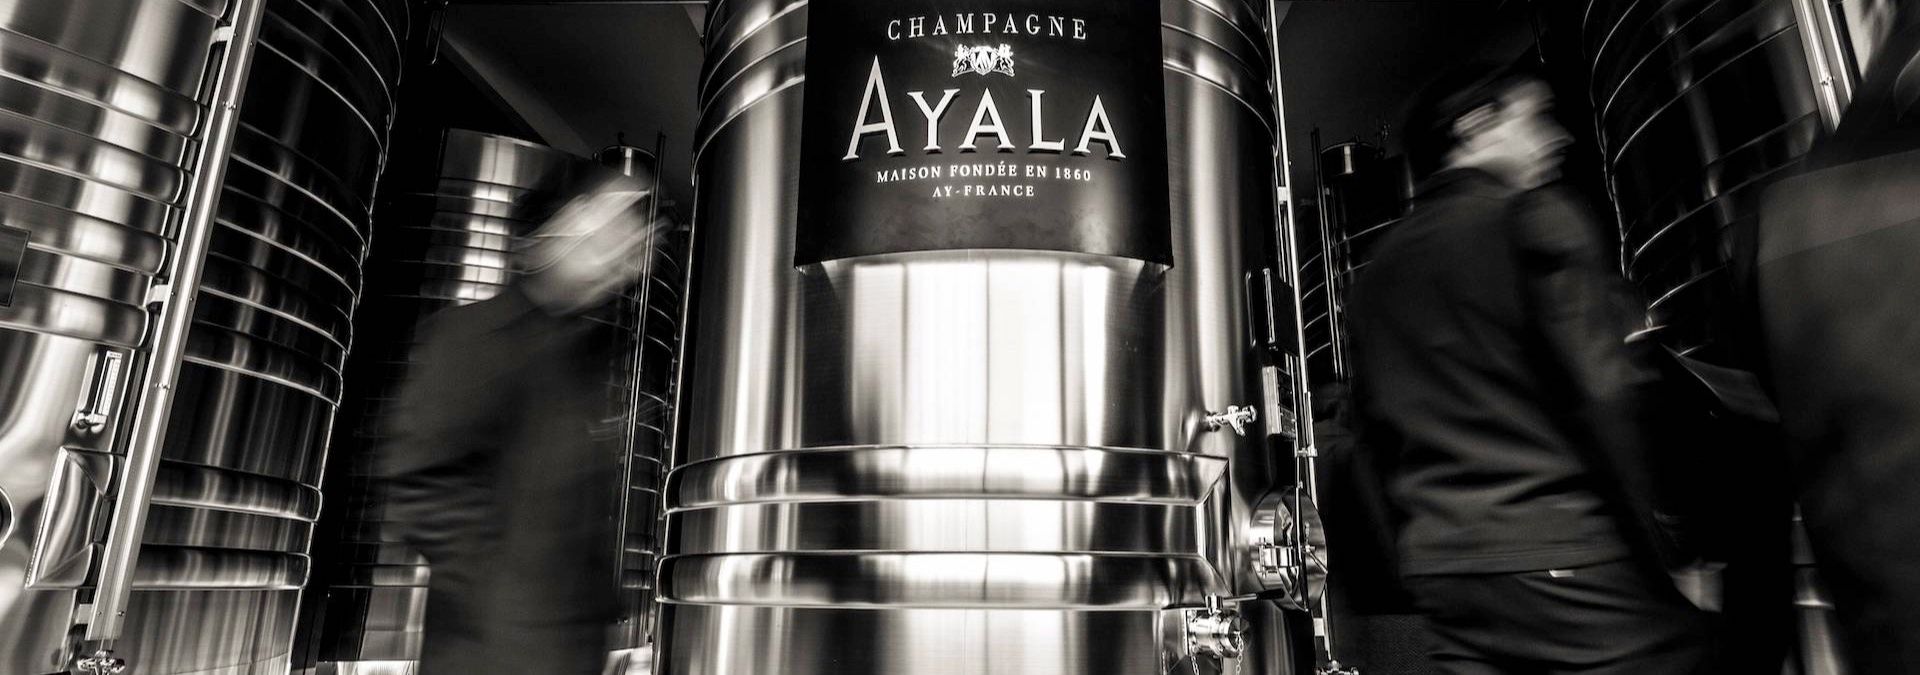 Champagne Ayala - Rue des Vignerons